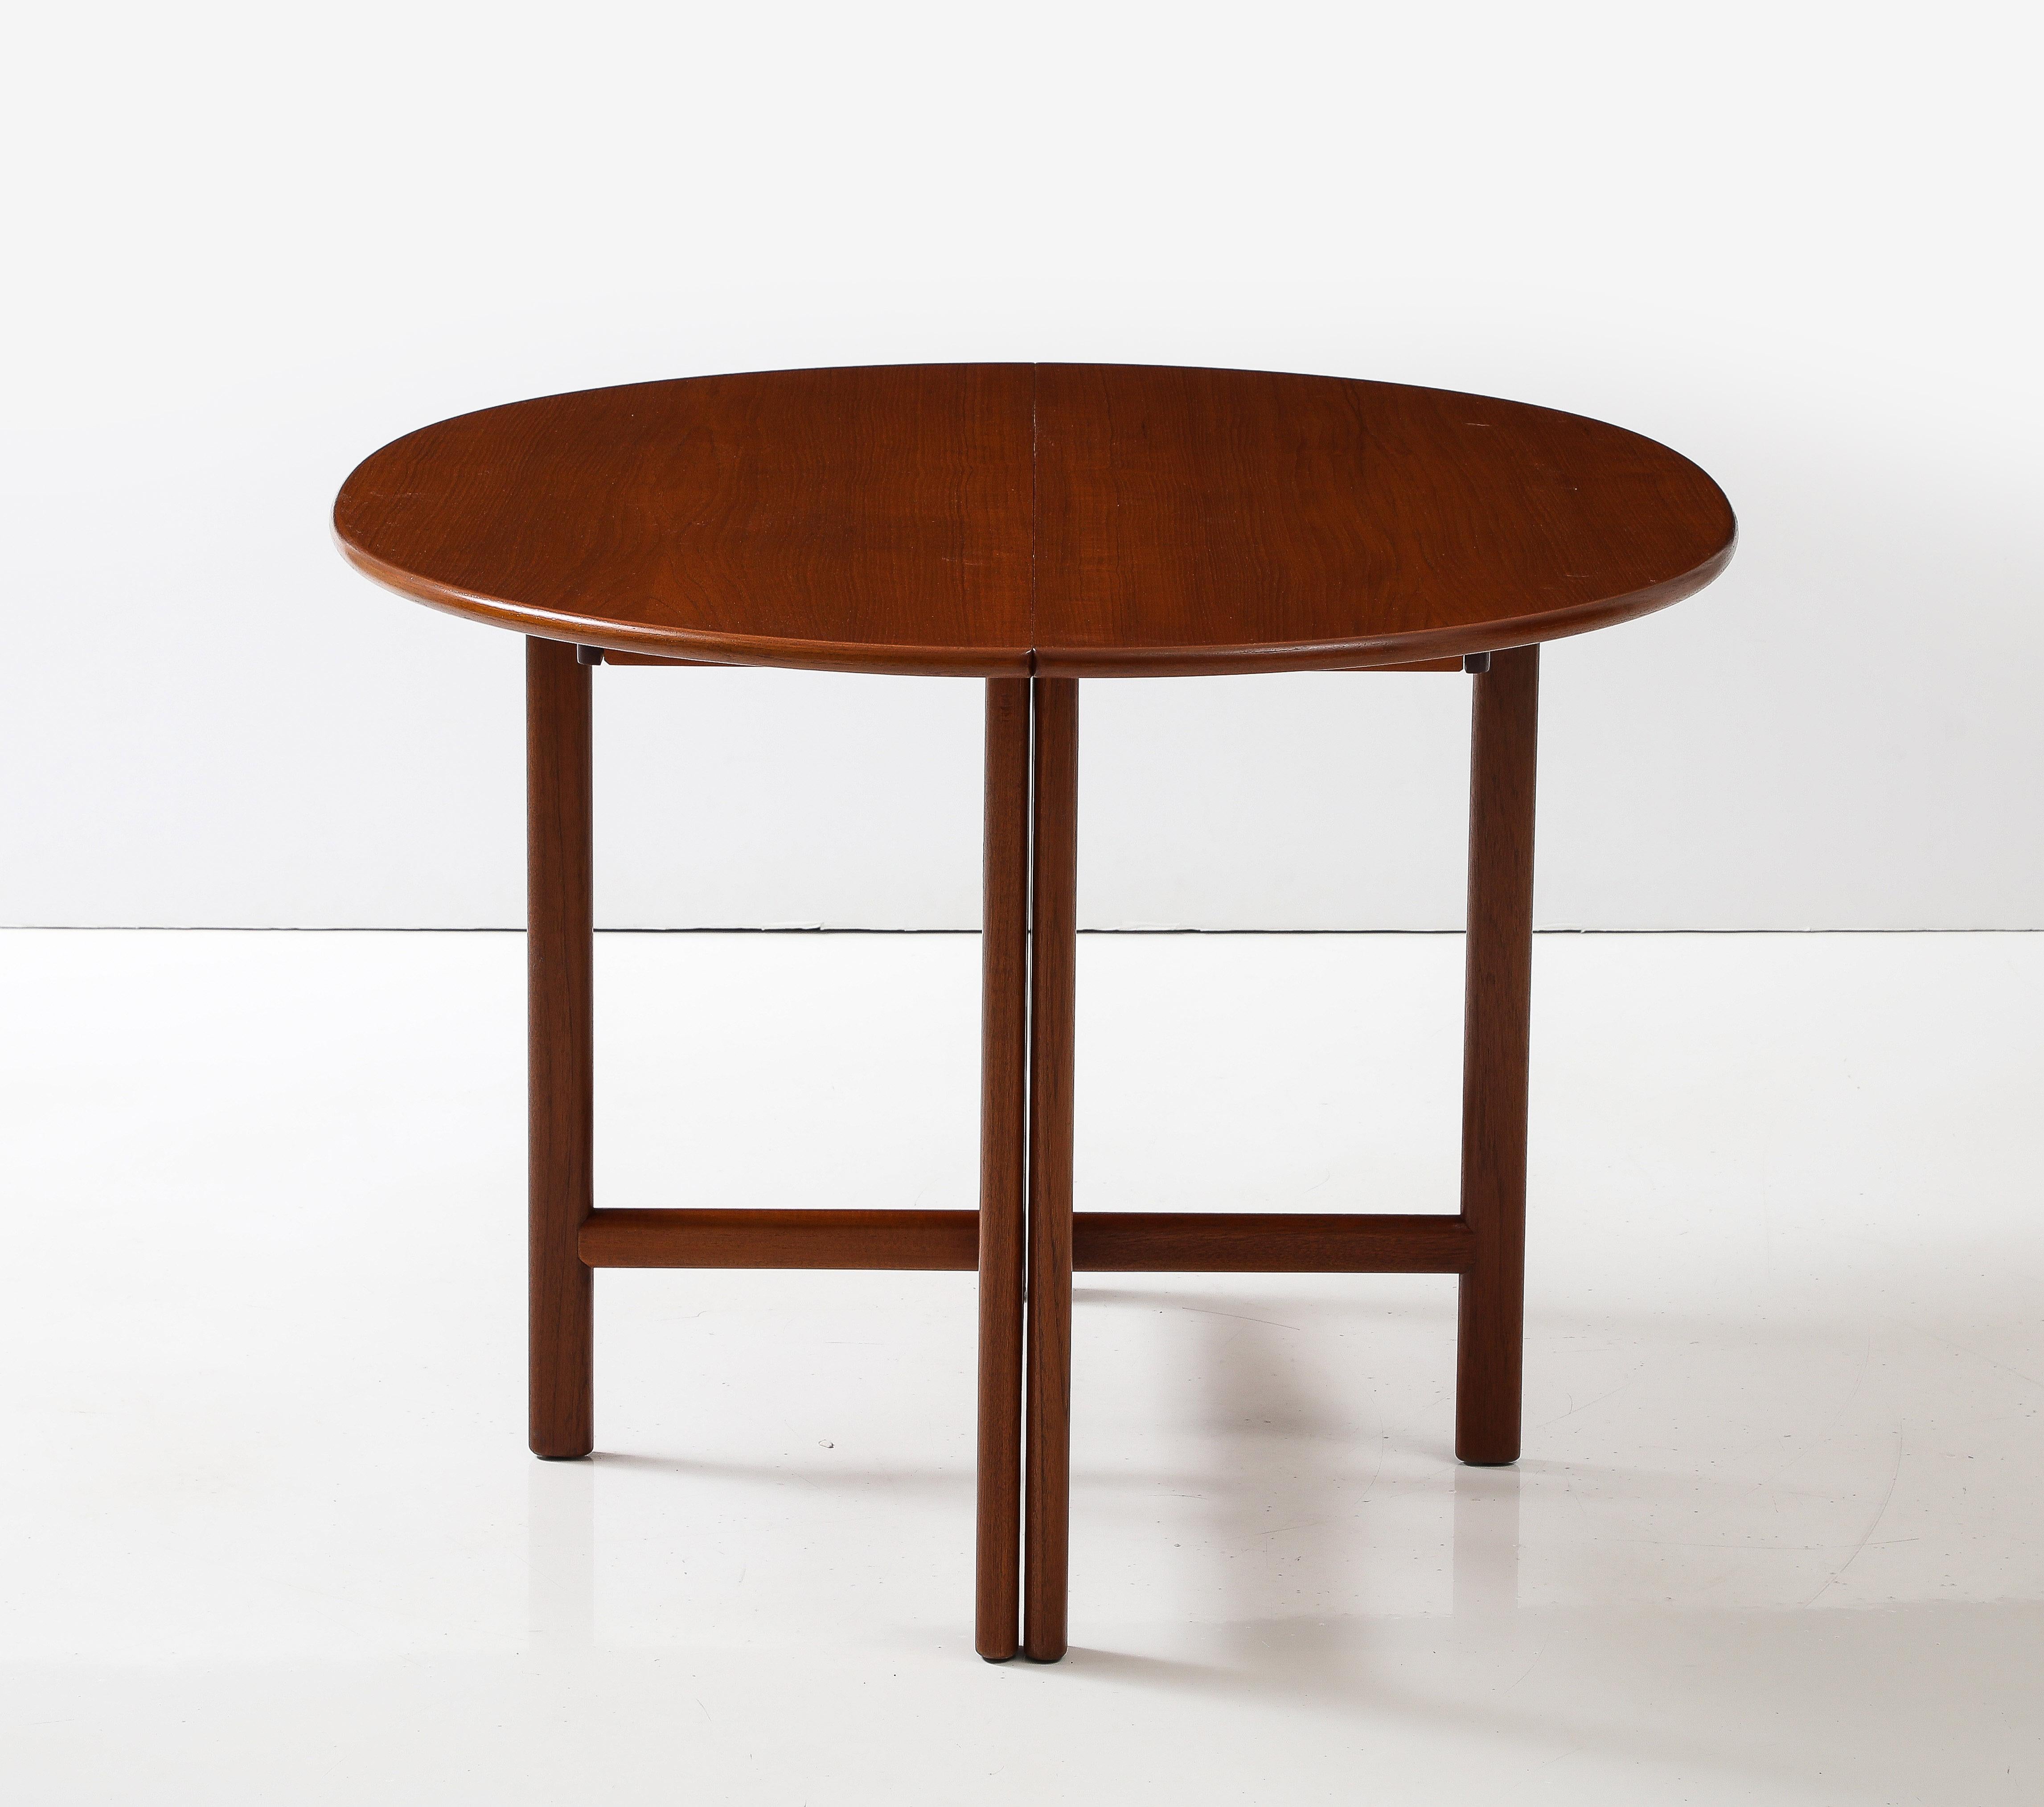 Mid-20th Century 1960's Teak Dining Table Designed By Karl-Erik Ekselius For JOC With 3 Leaves